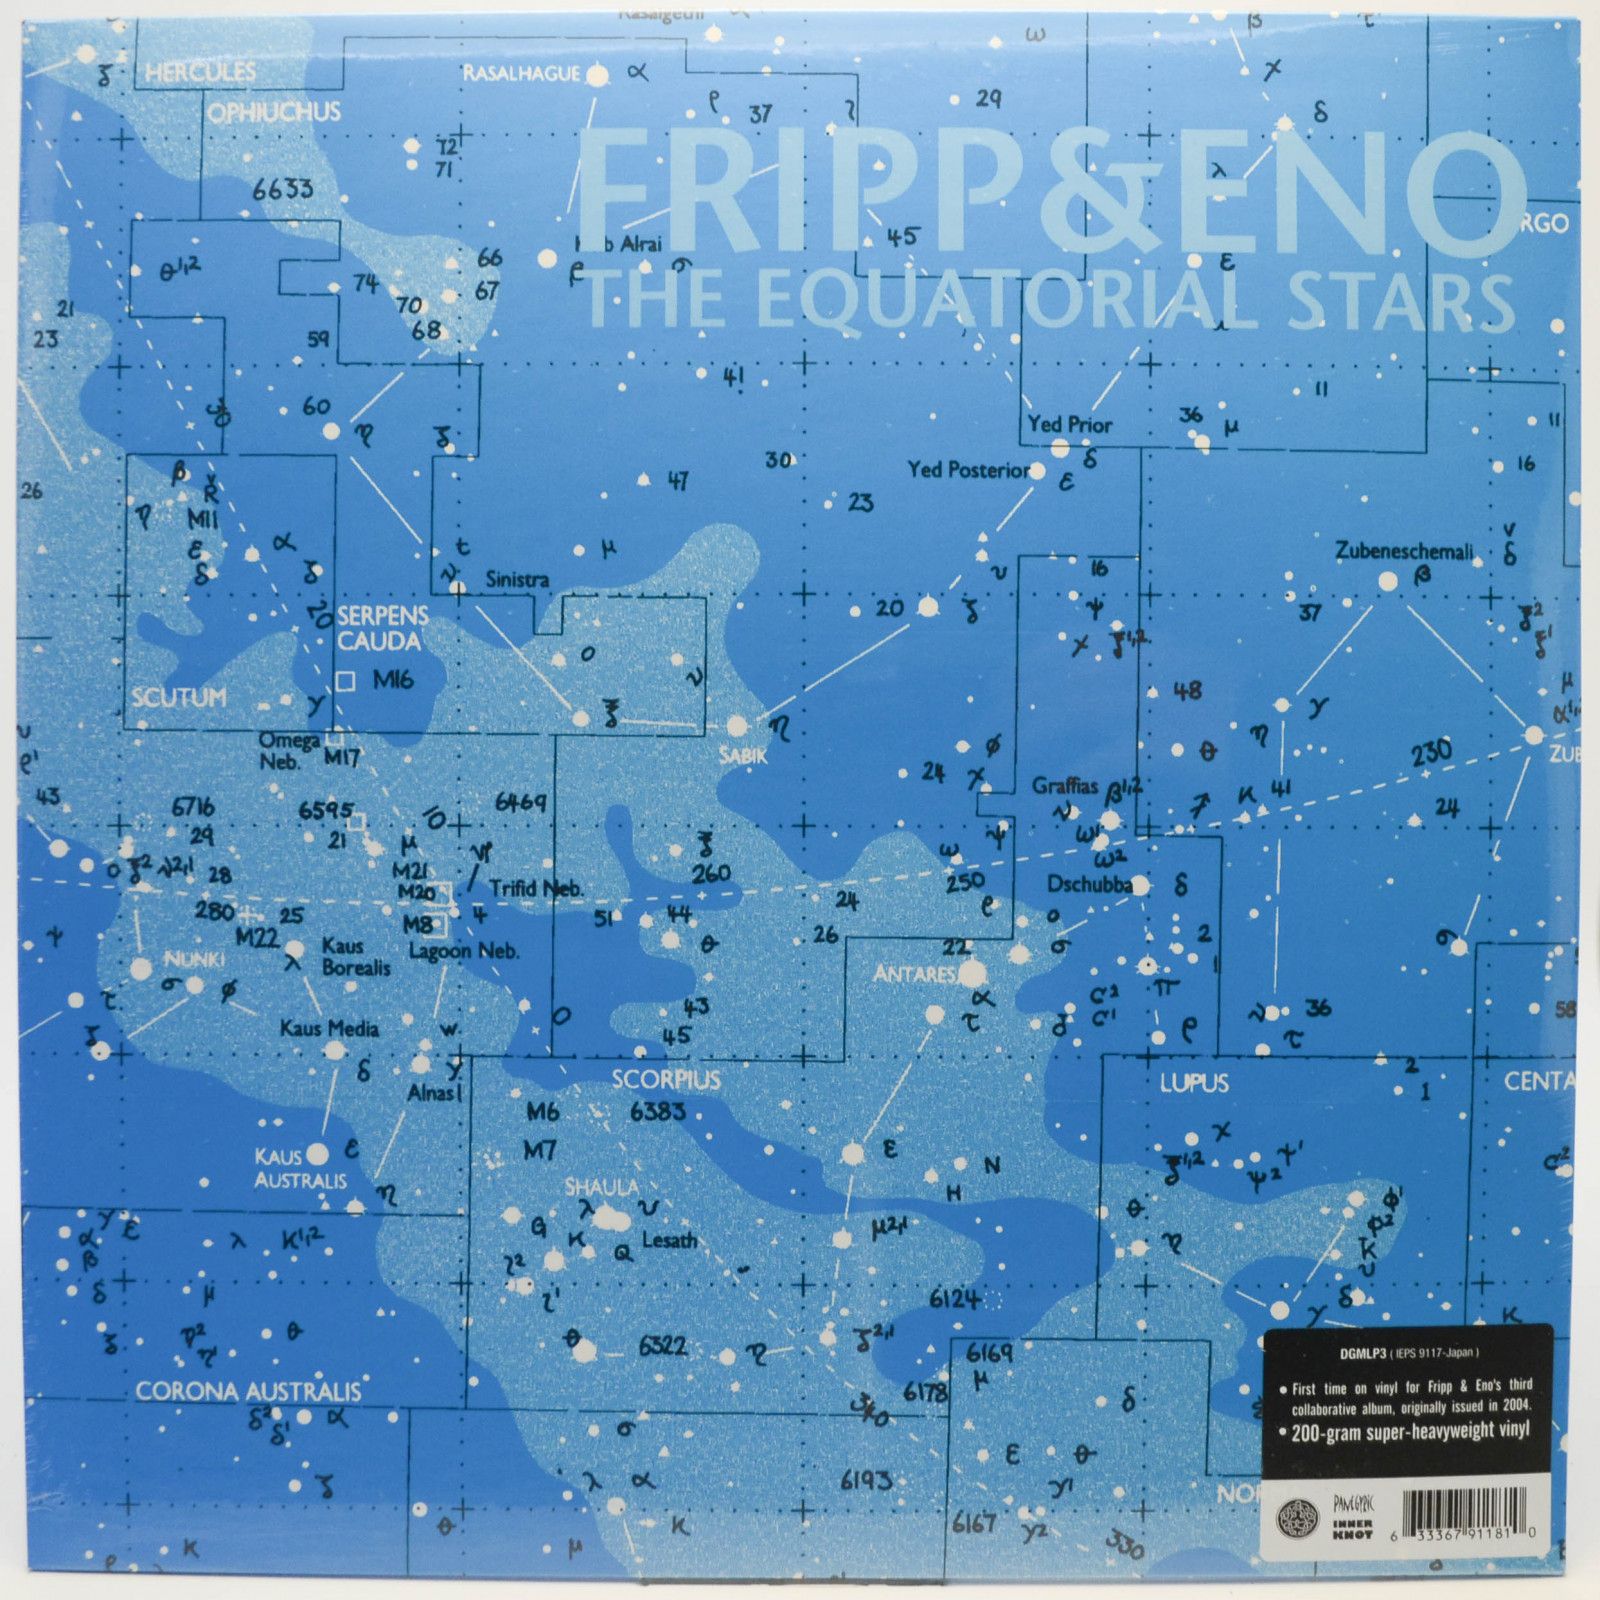 Fripp & Eno — The Equatorial Stars, 2004